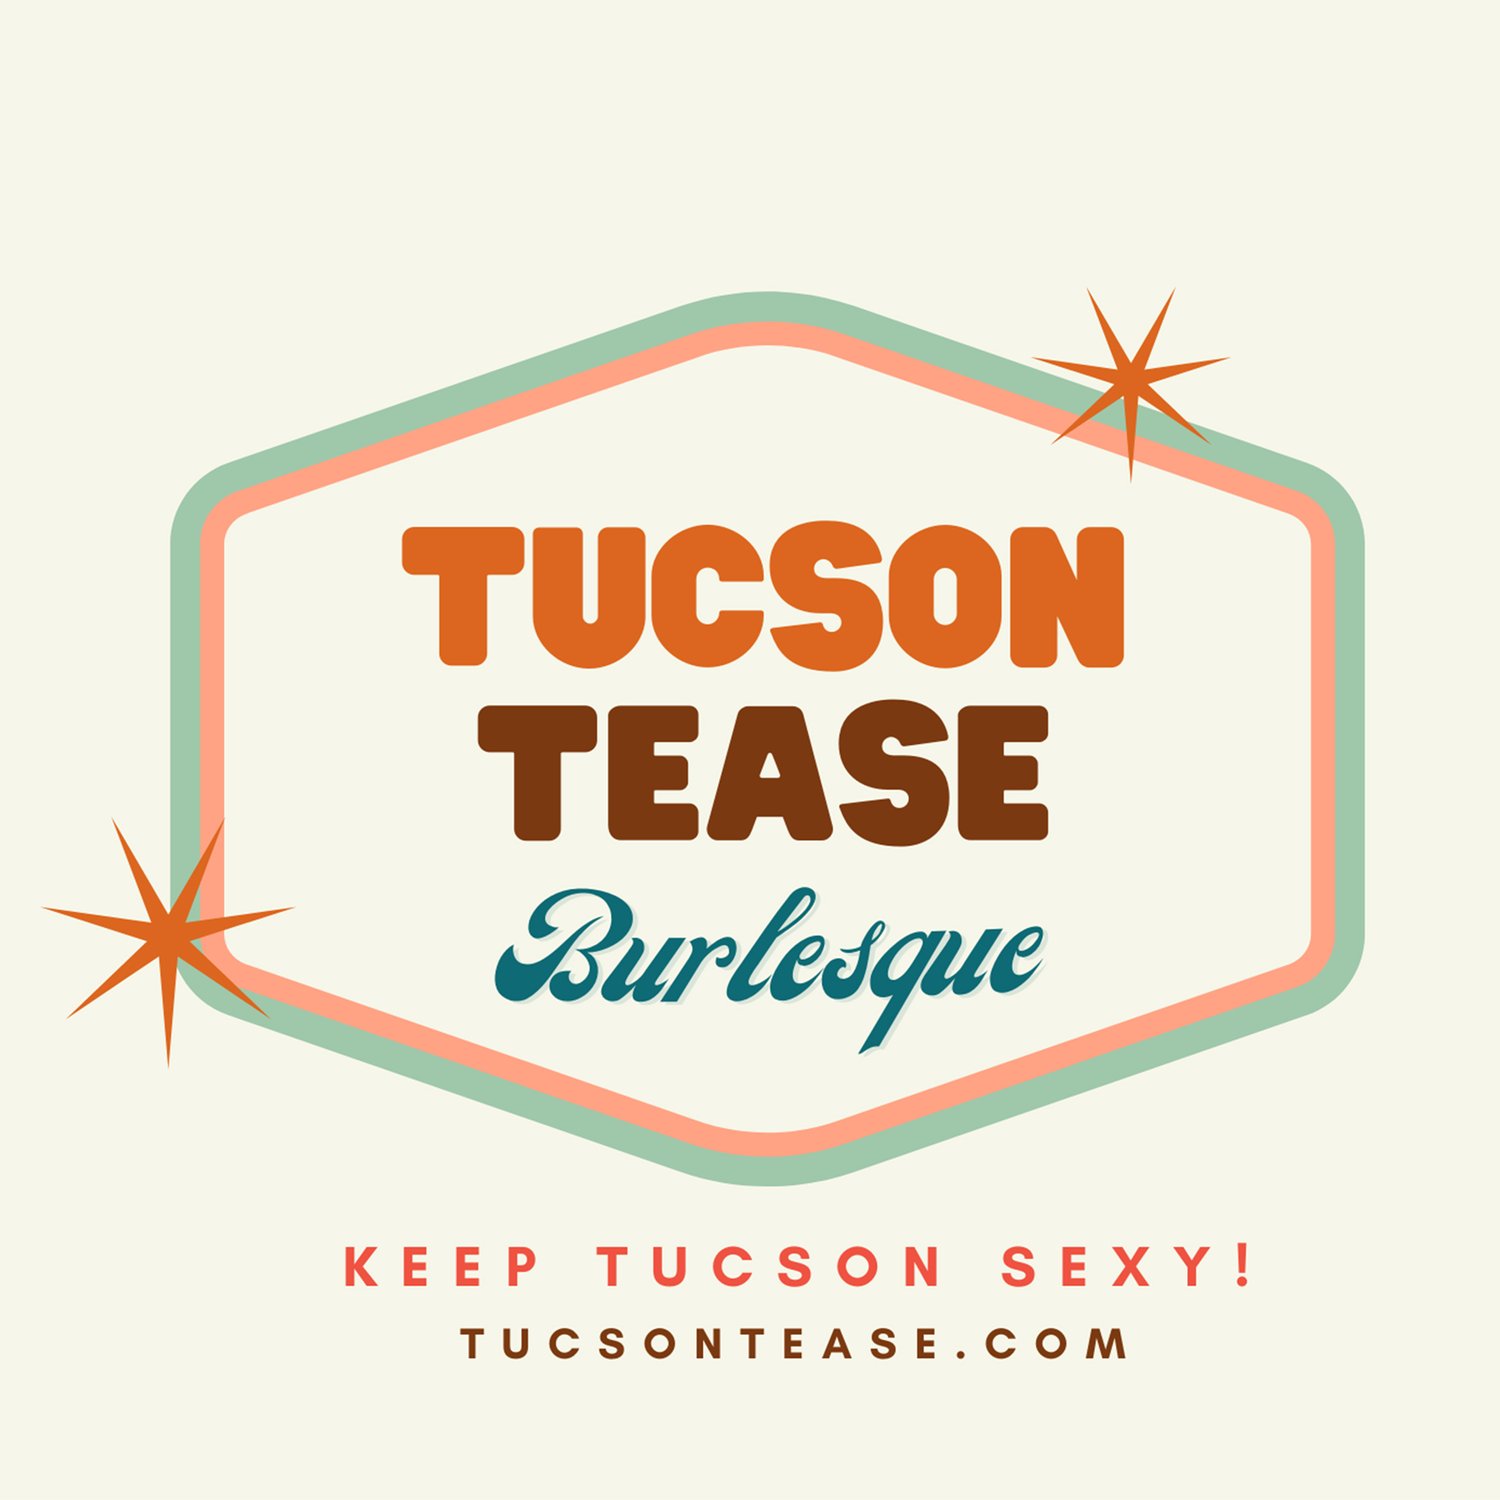 Tucson Tease Burlesque